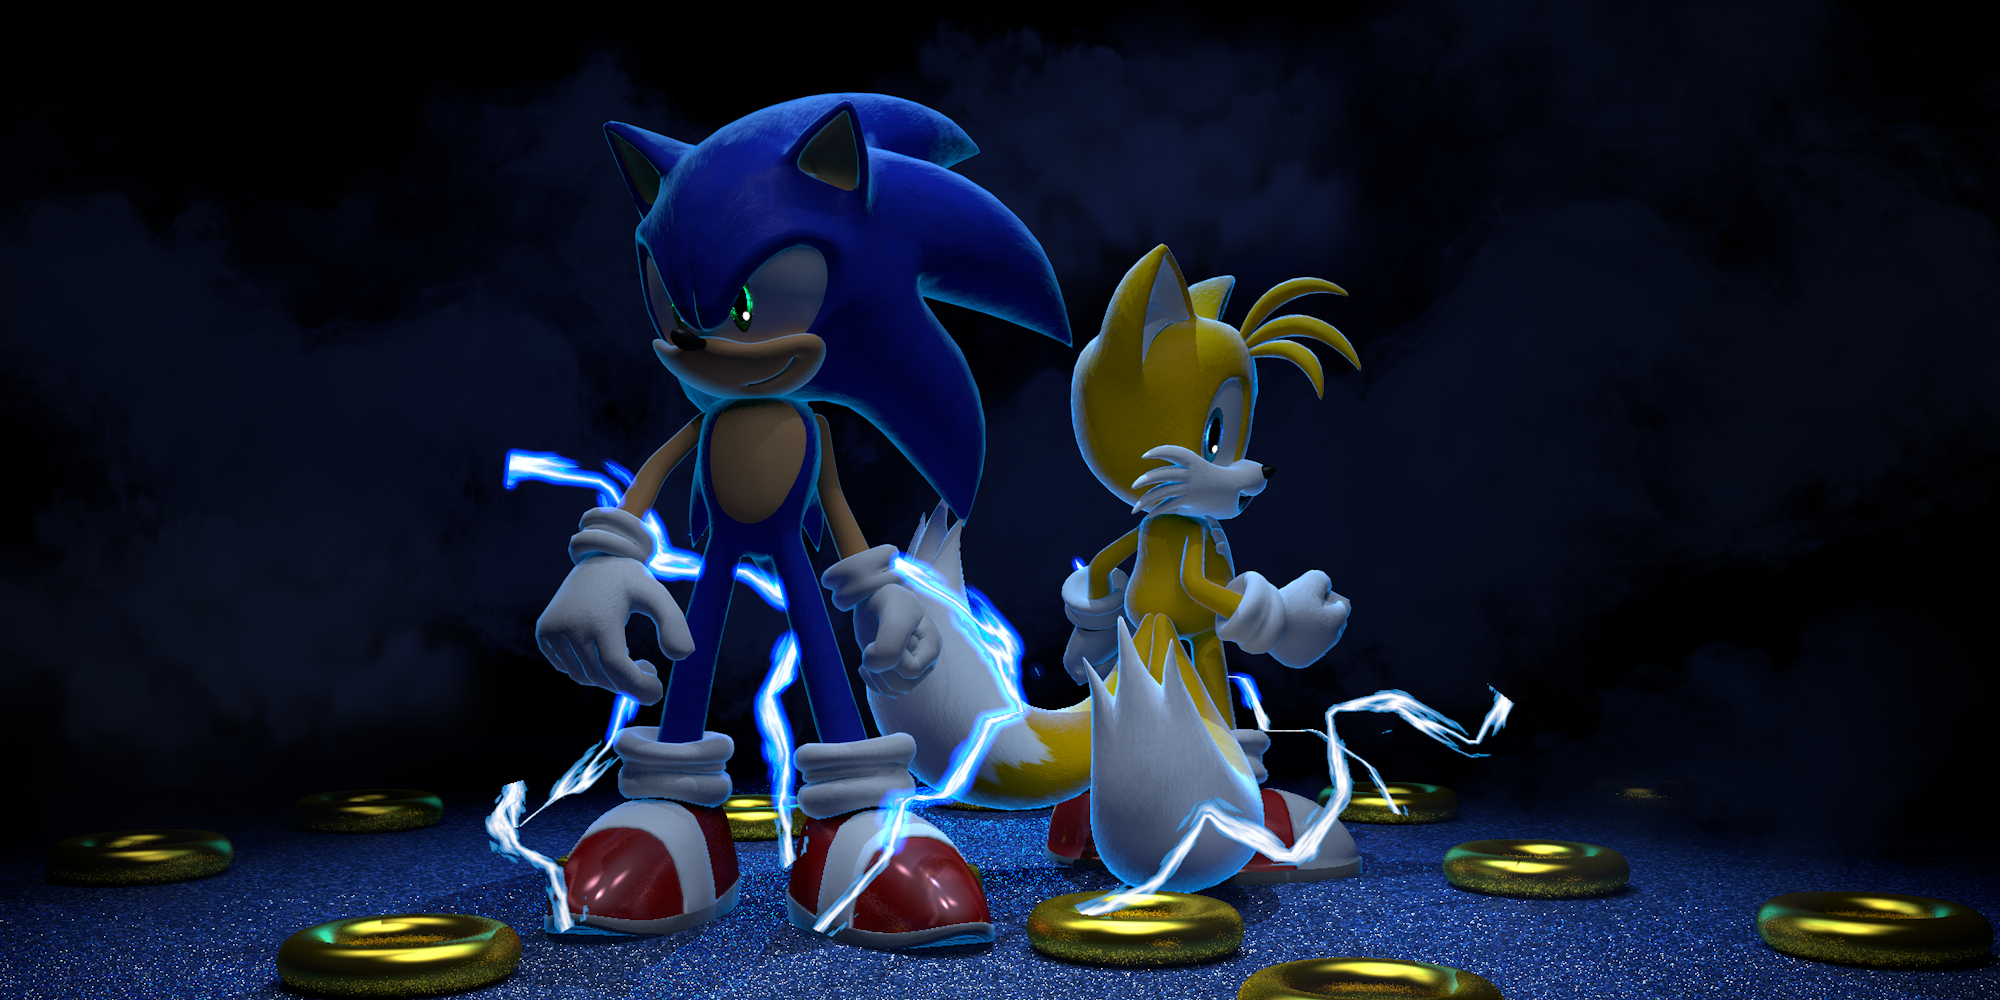 Sonic Speed Simulator Render - Prime Sonic by ShadowFriendly on DeviantArt